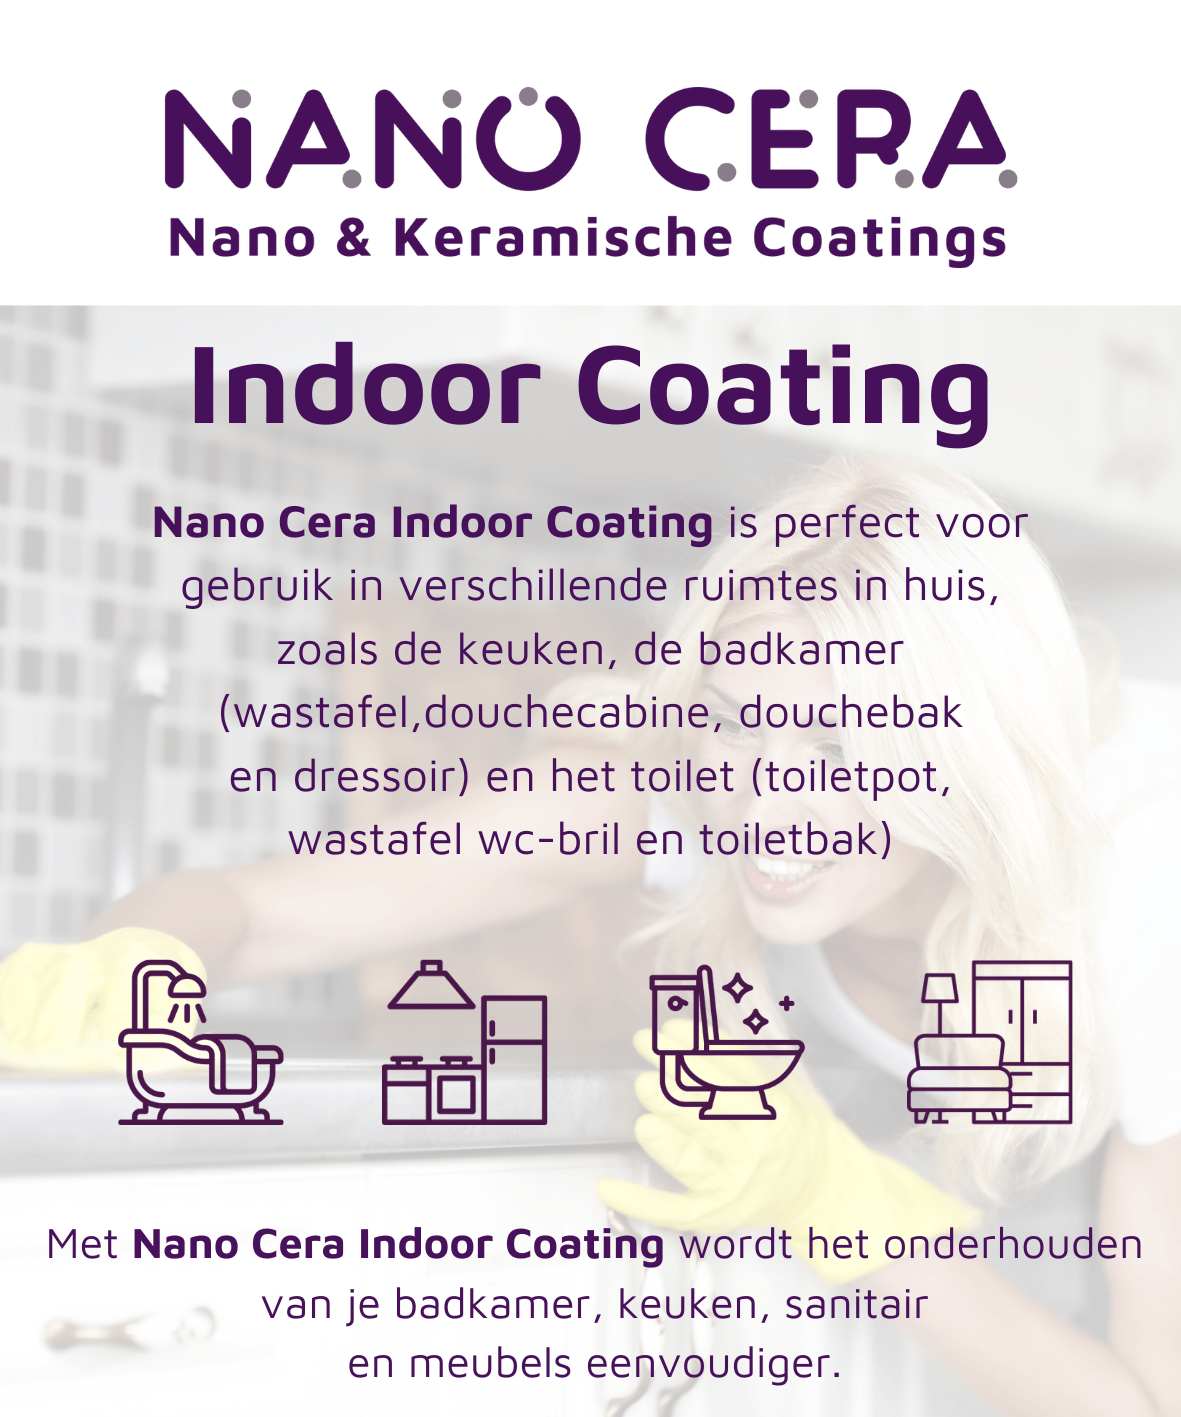 Nano Cera indoor coating